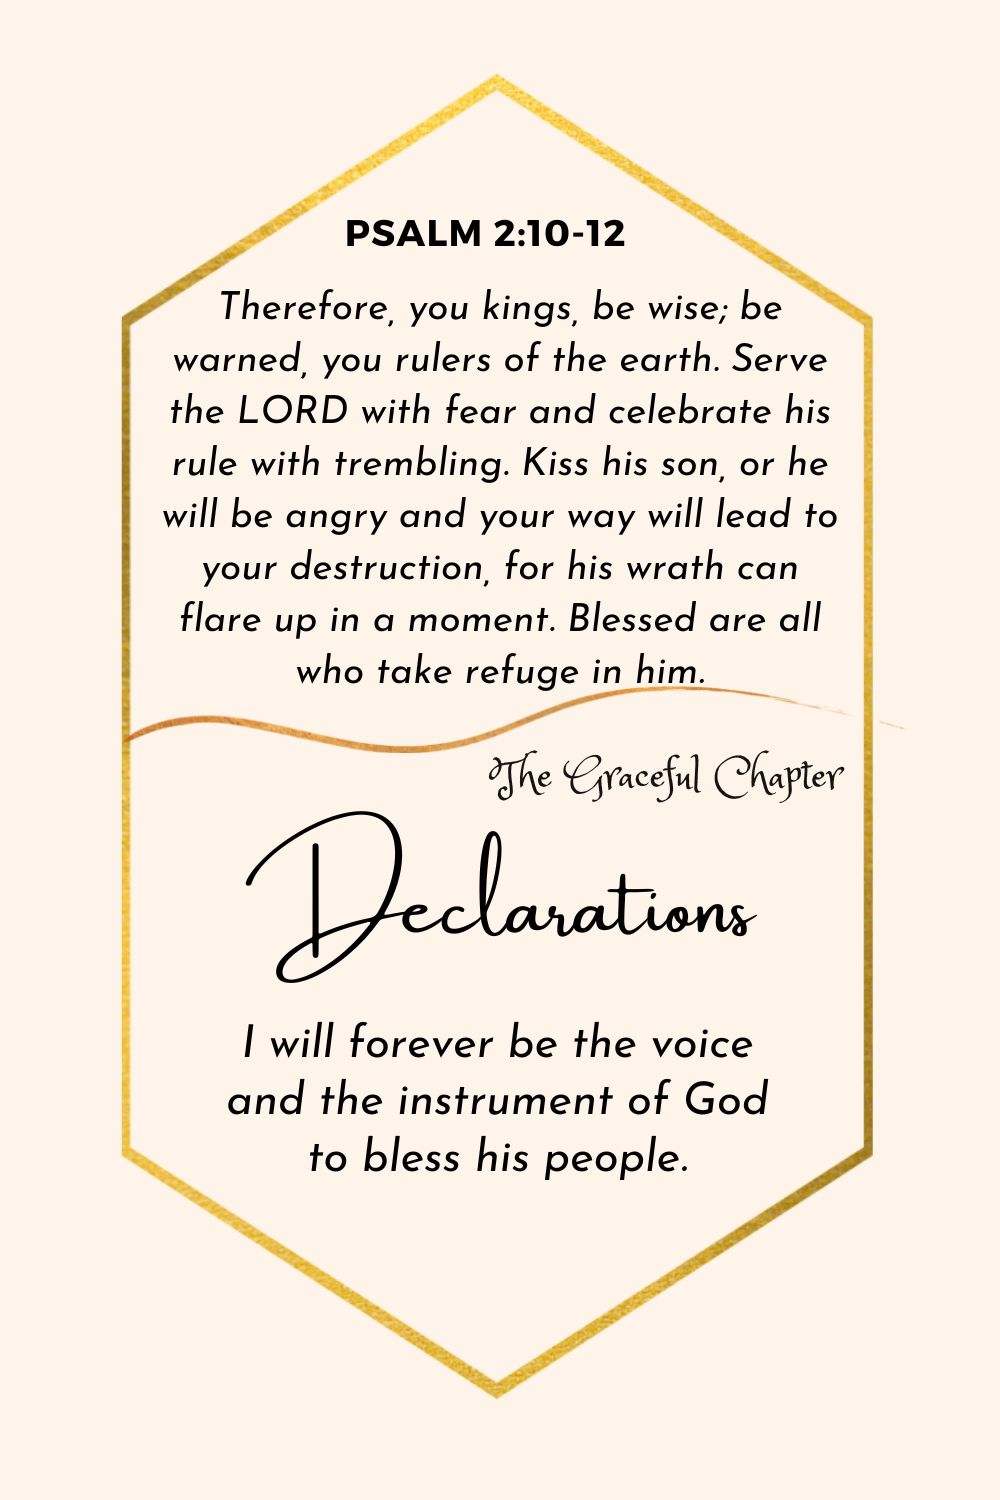 Declaration Psalm 2:10-12